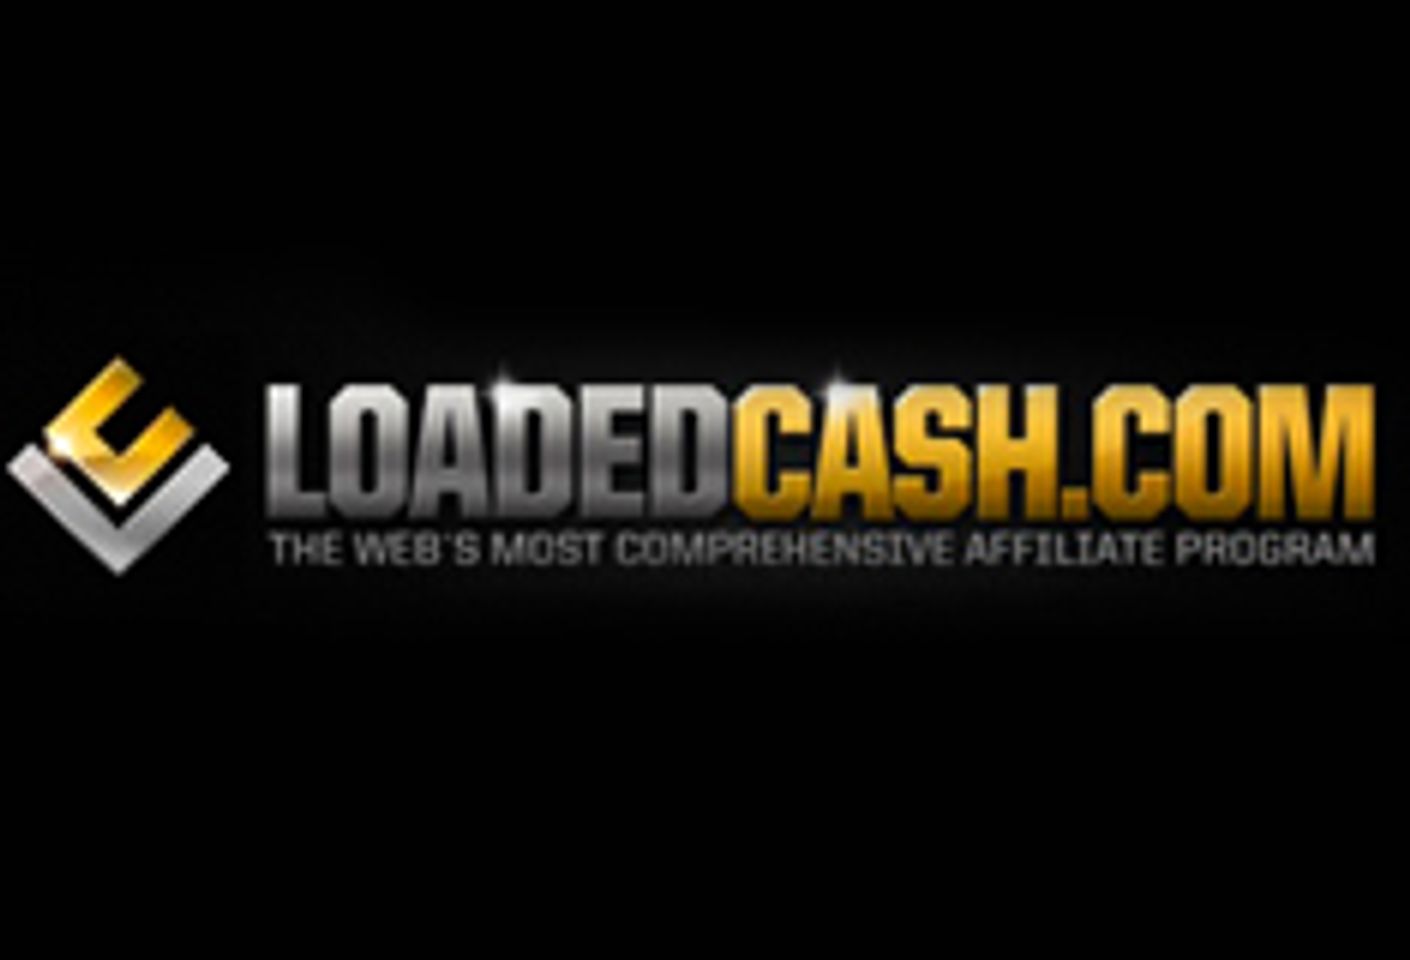 LoadedCash.com Announces New Partner, iHookup.com